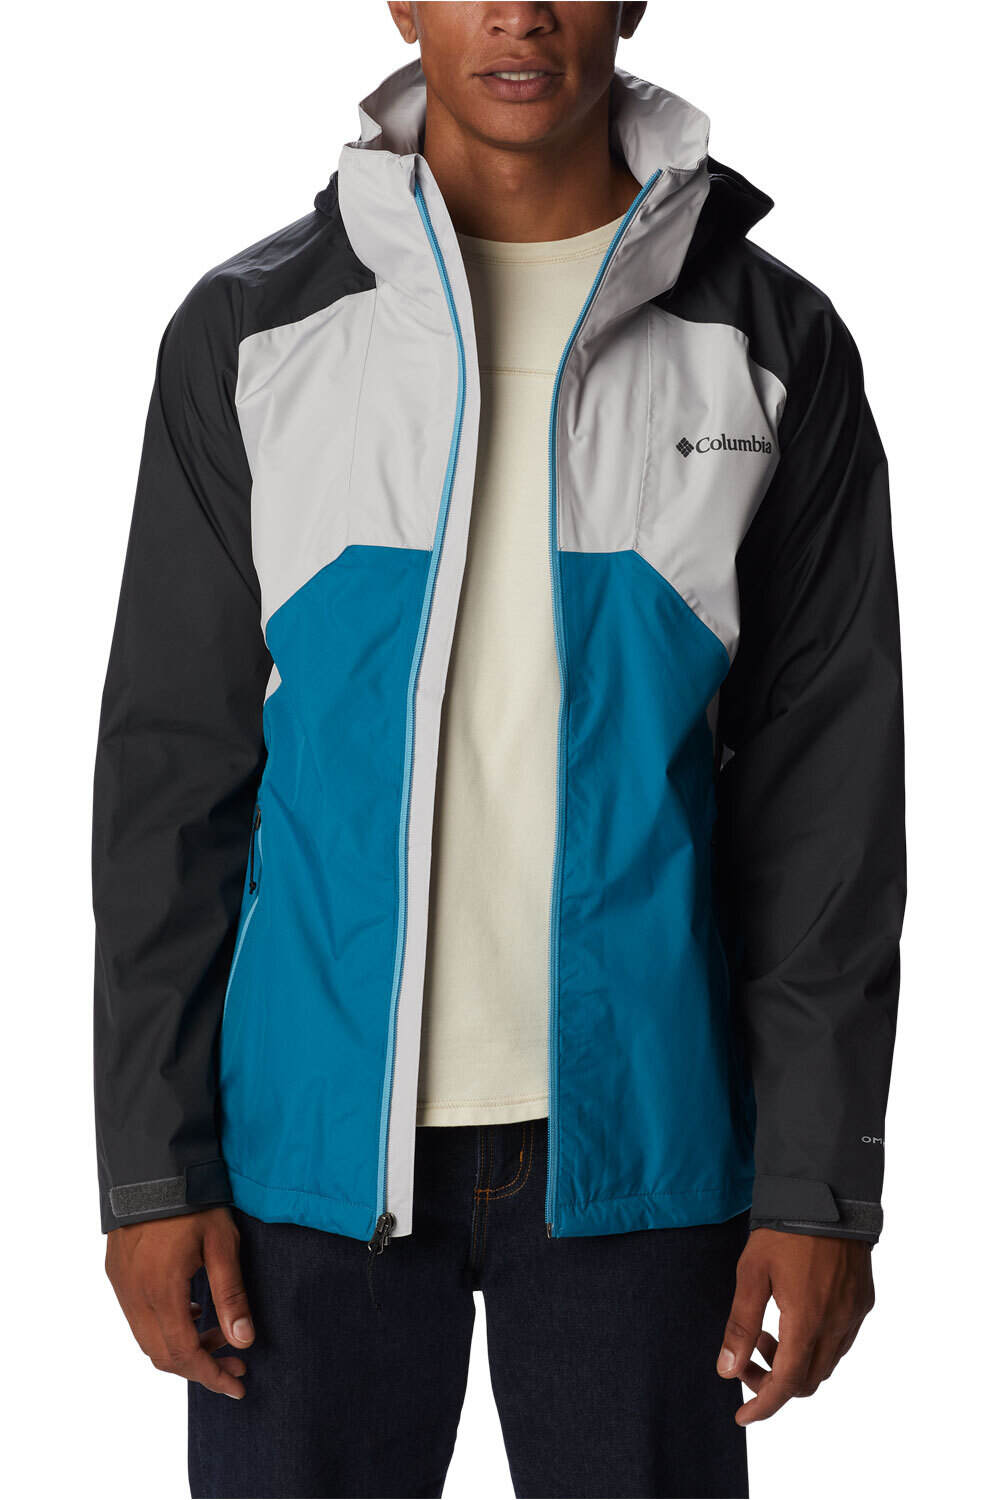 Columbia chaqueta impermeable hombre Rain Scape Jacket vista frontal